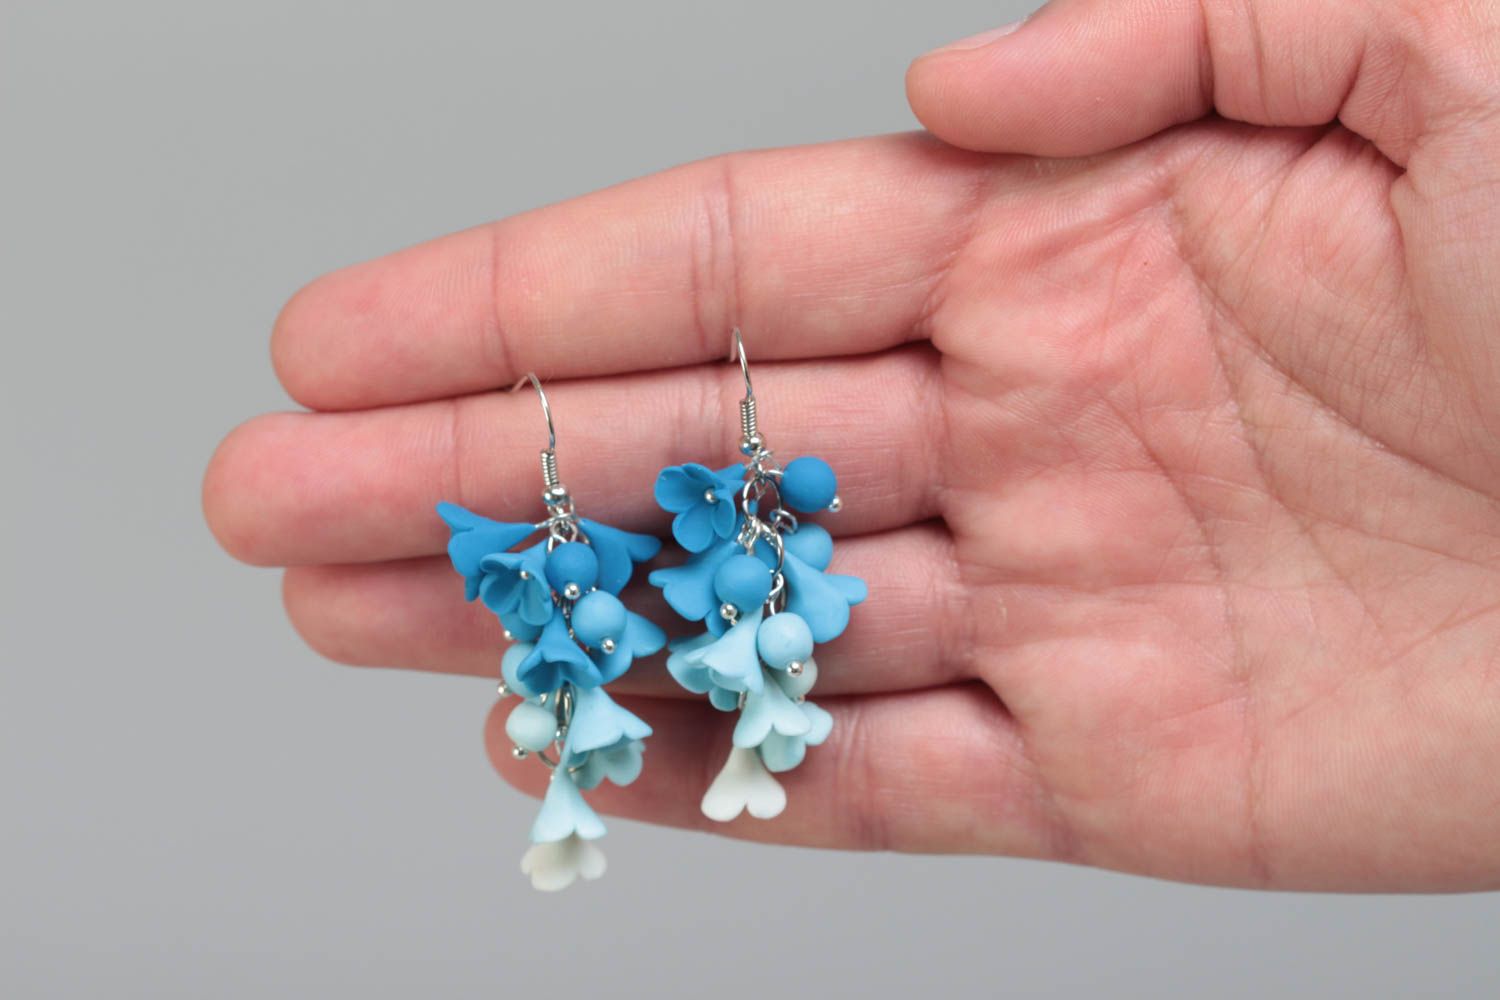 Details more than 206 light blue colour earrings